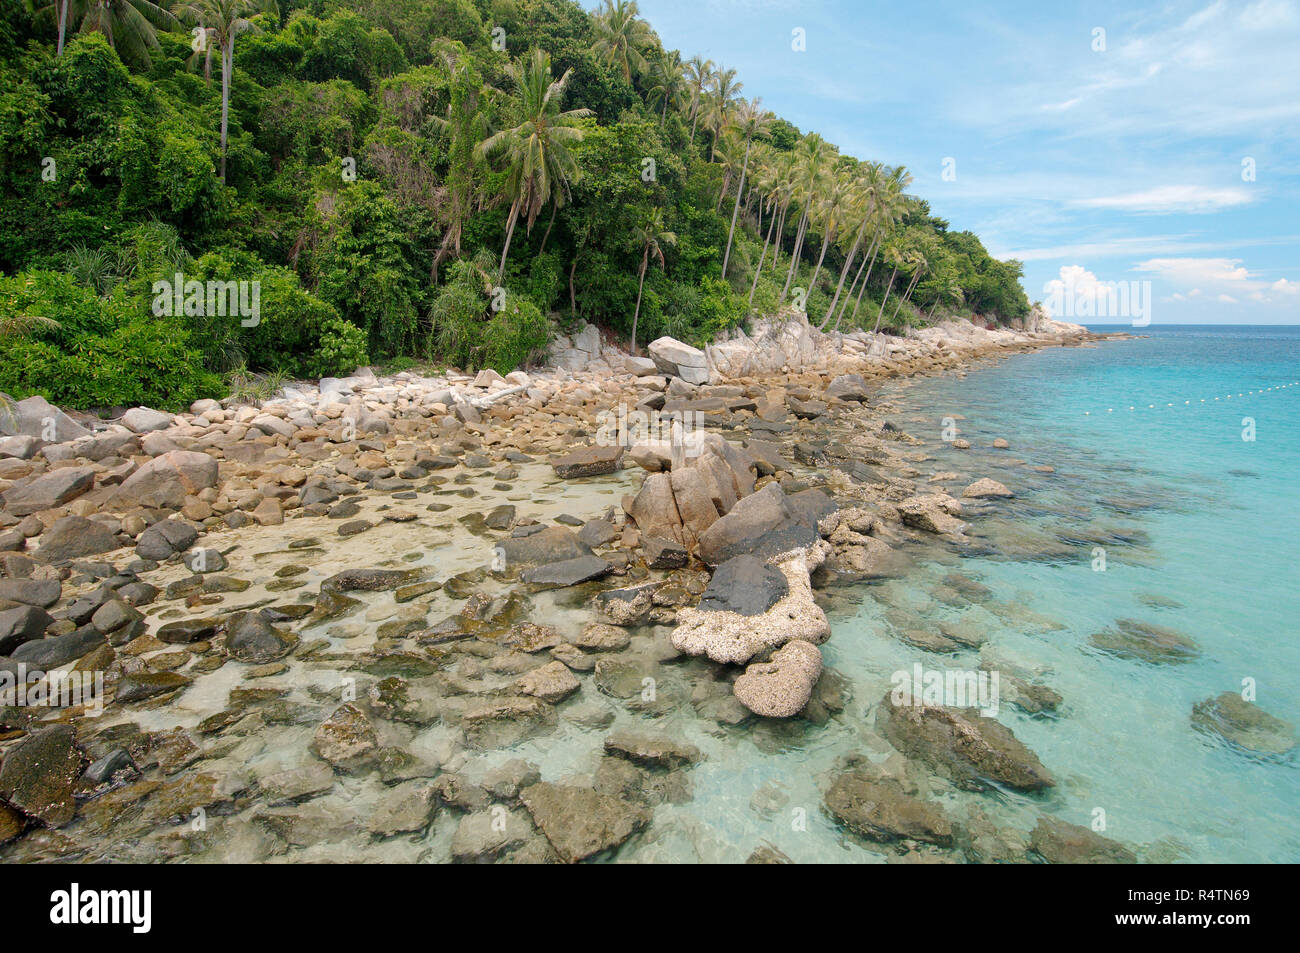 La playa rocosa, islas Perhentian, Malasia Foto de stock